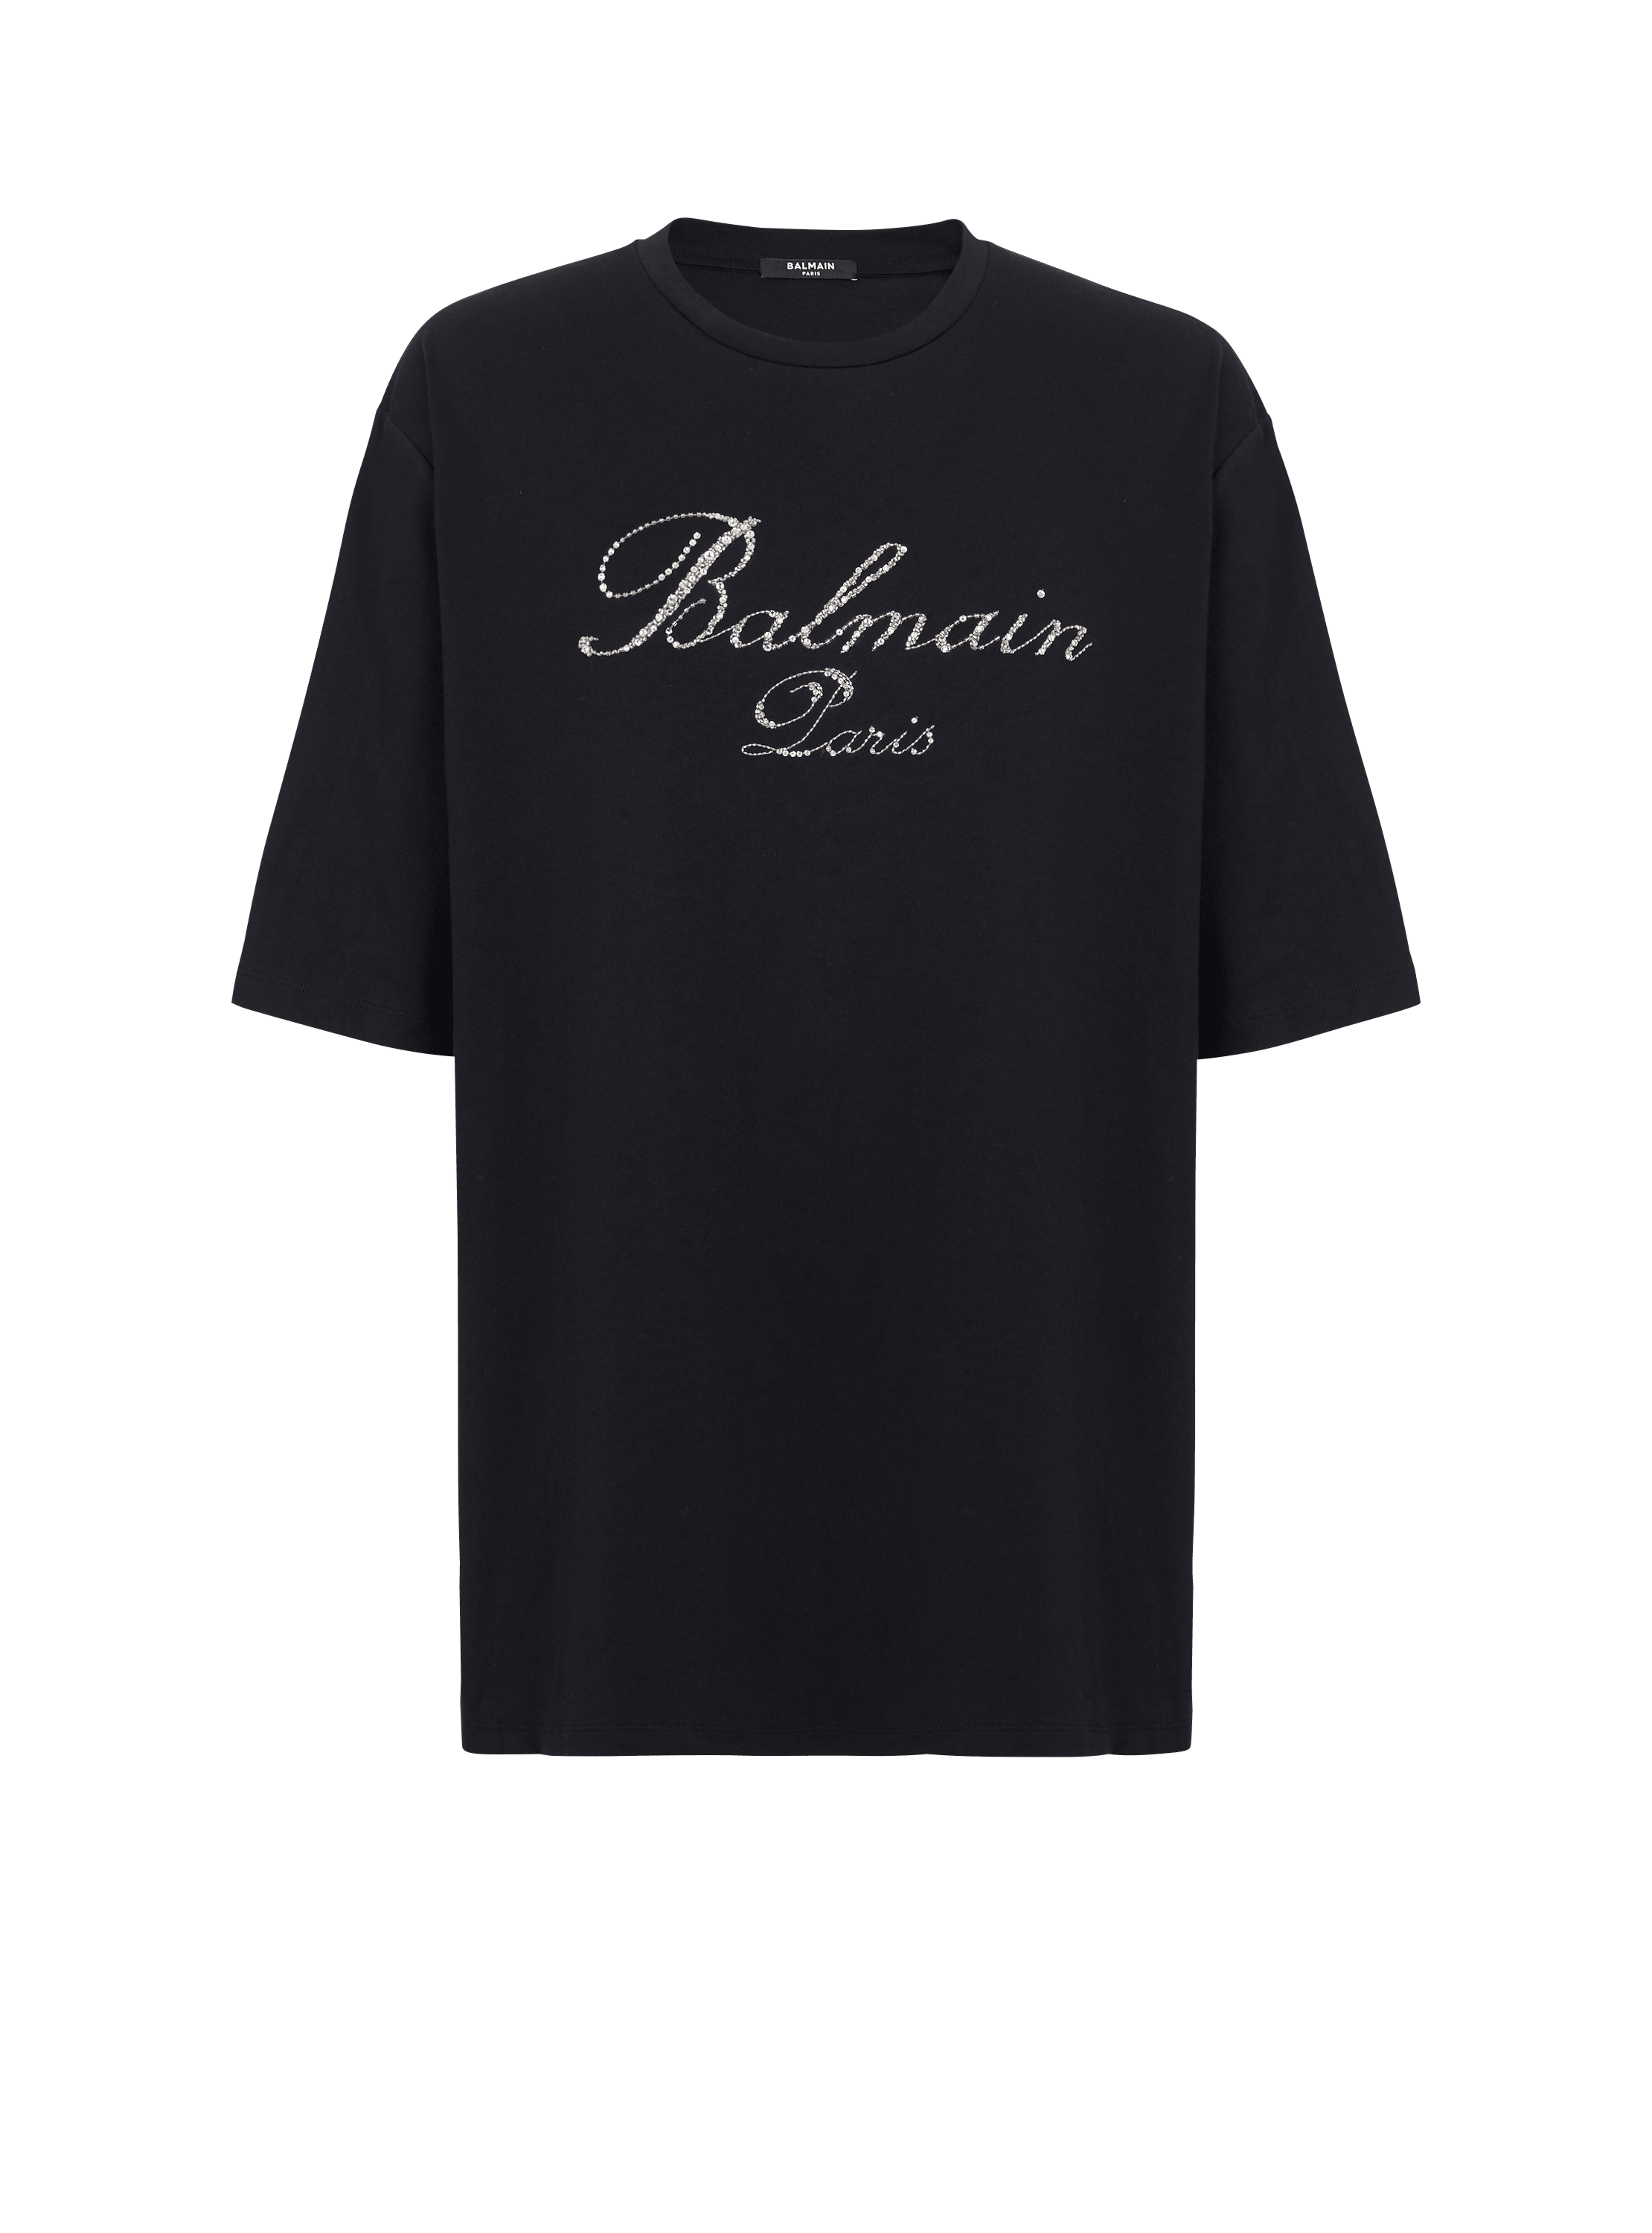 Besticktes Balmain Signature T-Shirt, schwarz, hi-res